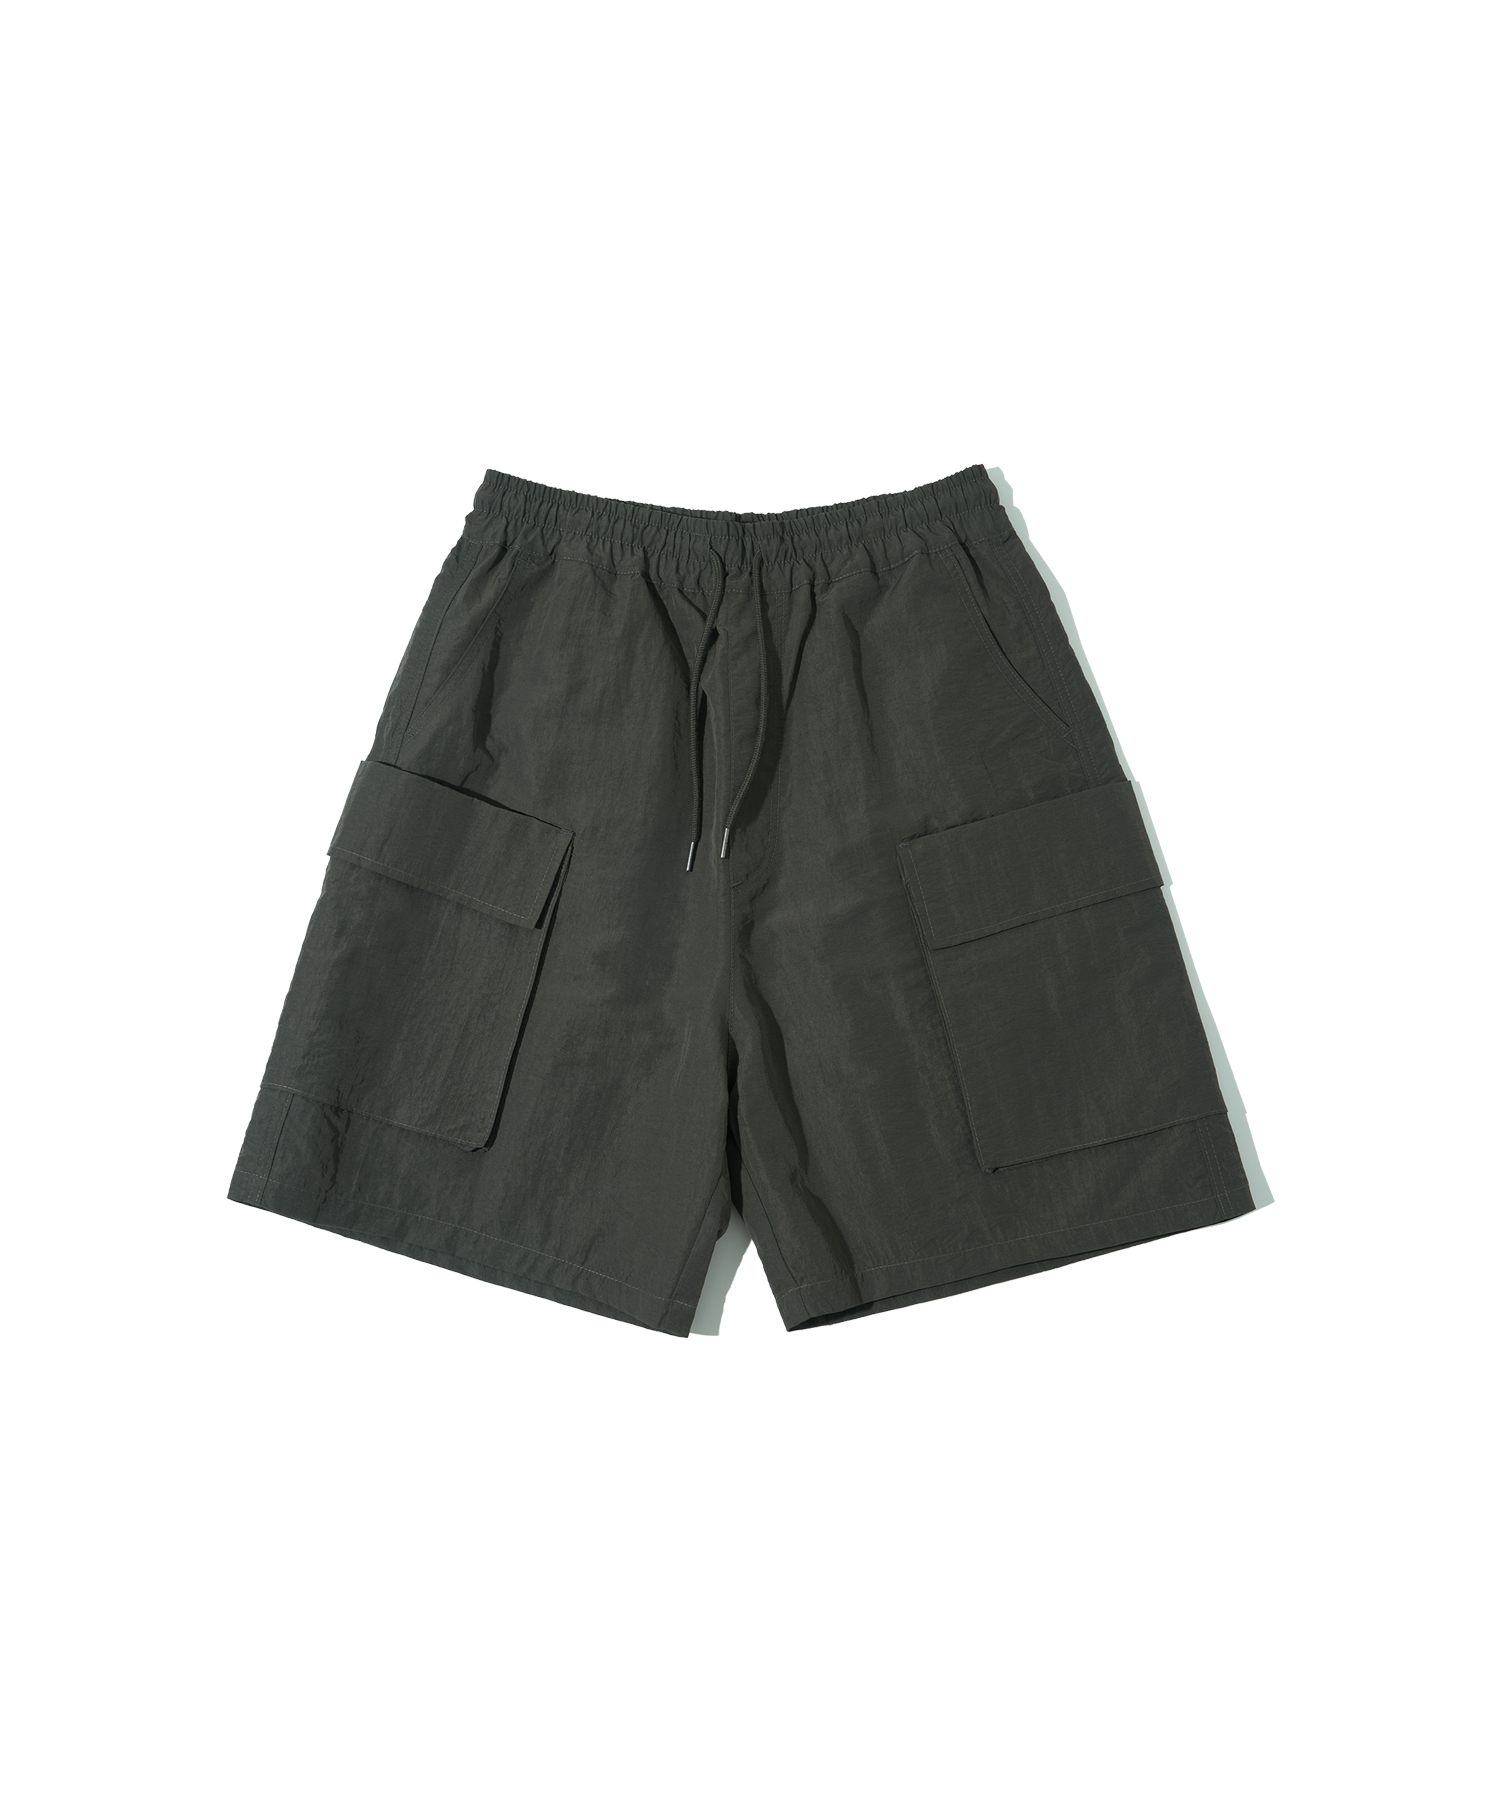 P10002 Bermuda cargo shorts_Dark khaki